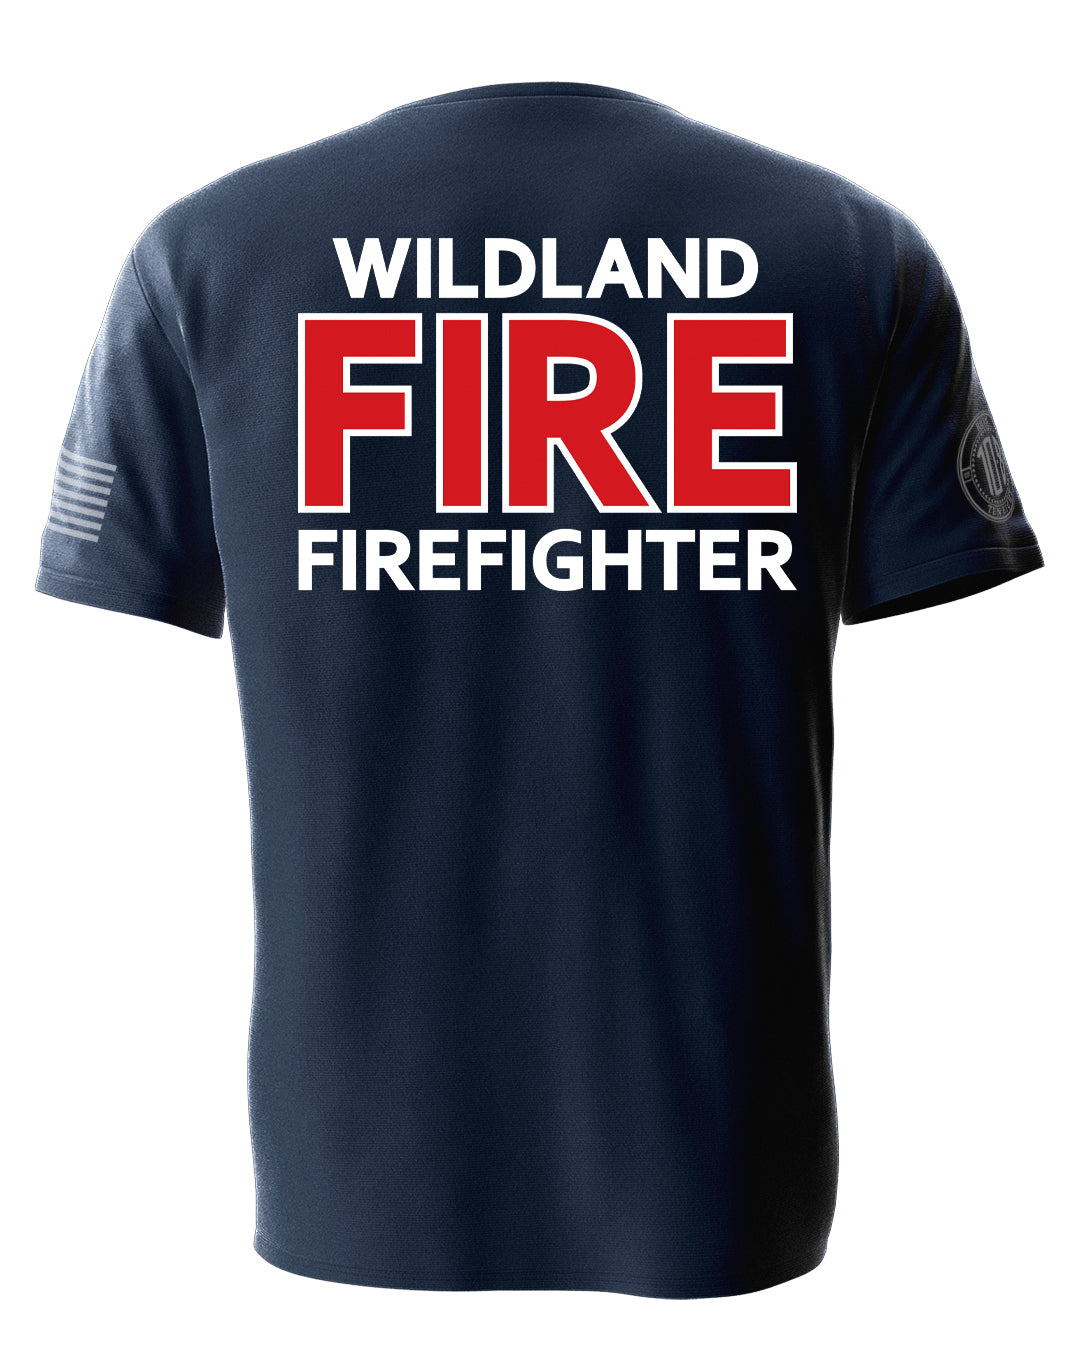 Navy Wildland Fire Firefighter Tee